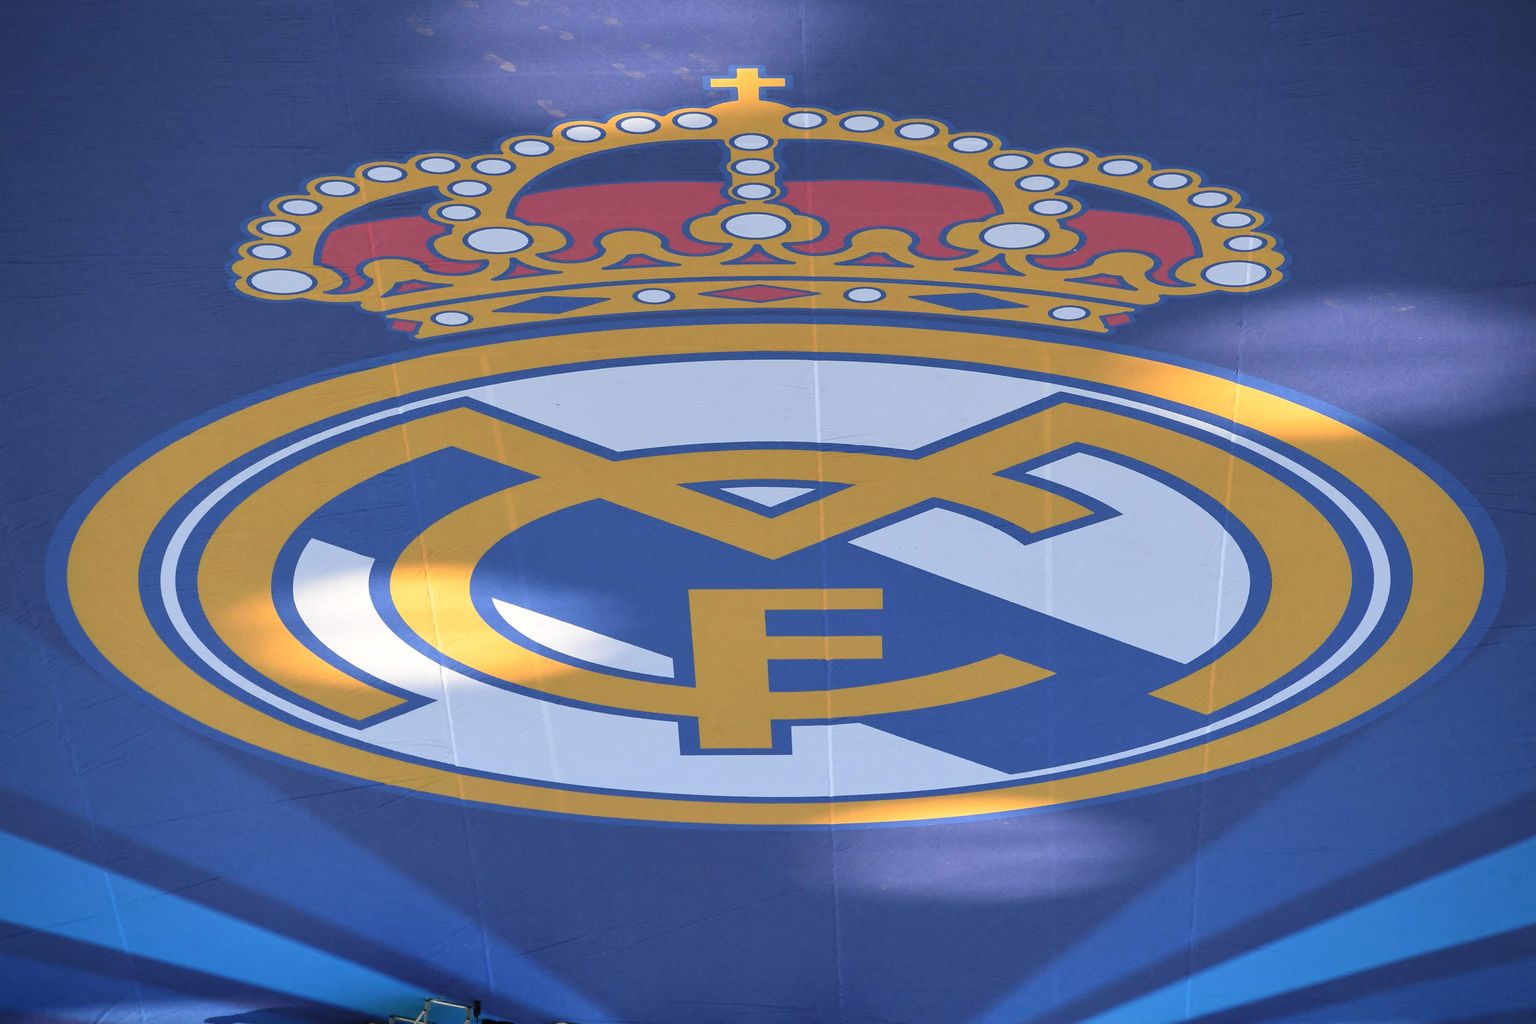 Madridi Reali logo.